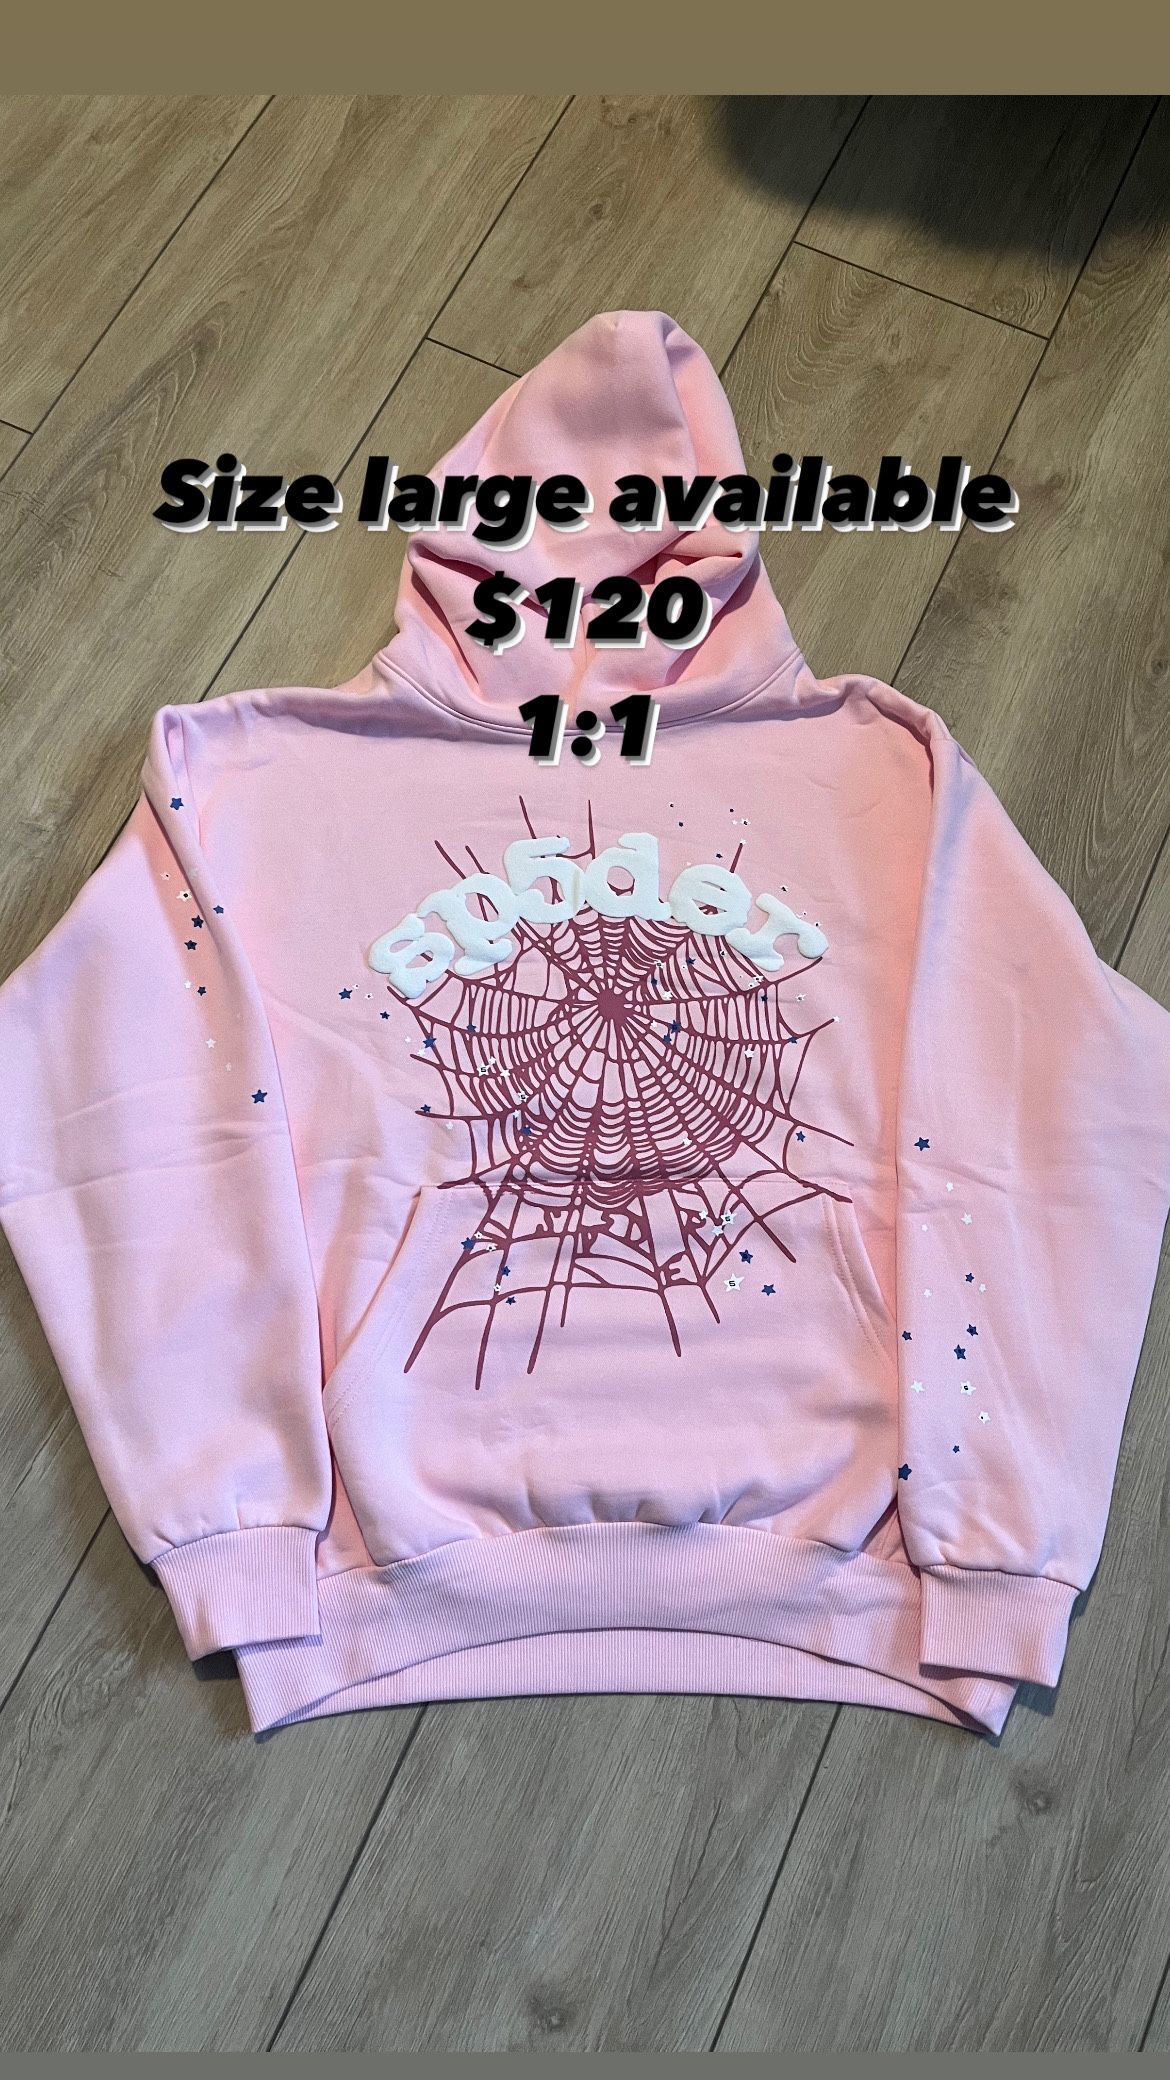 Sp5der Hoodie Pink Size Large 